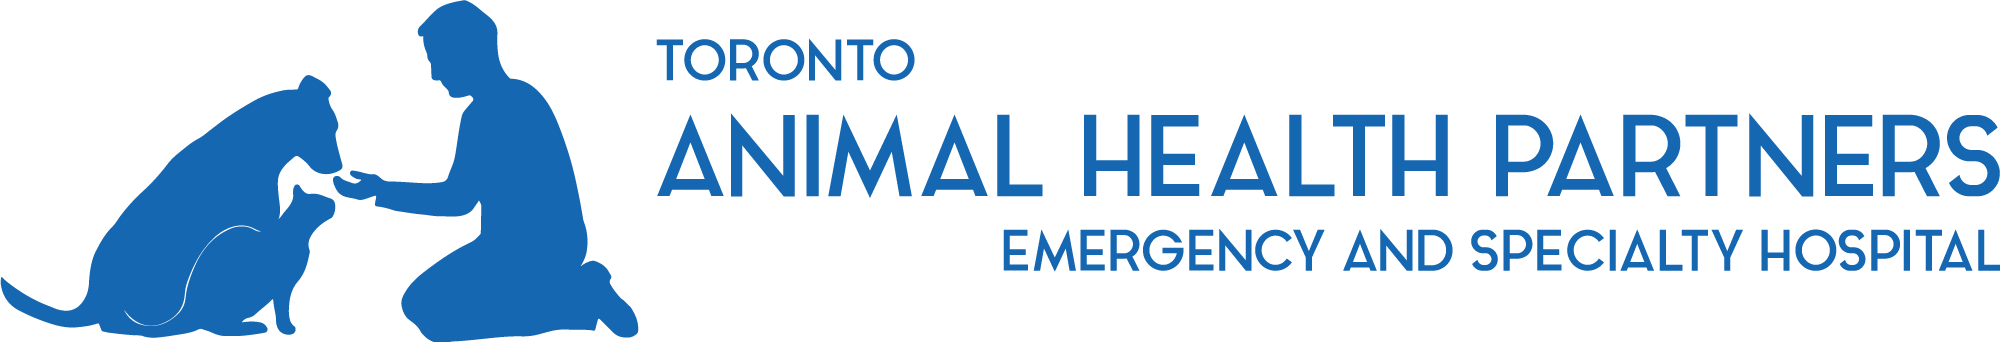 Toronto Animal Health Partners Emergency and Specialty Hospital